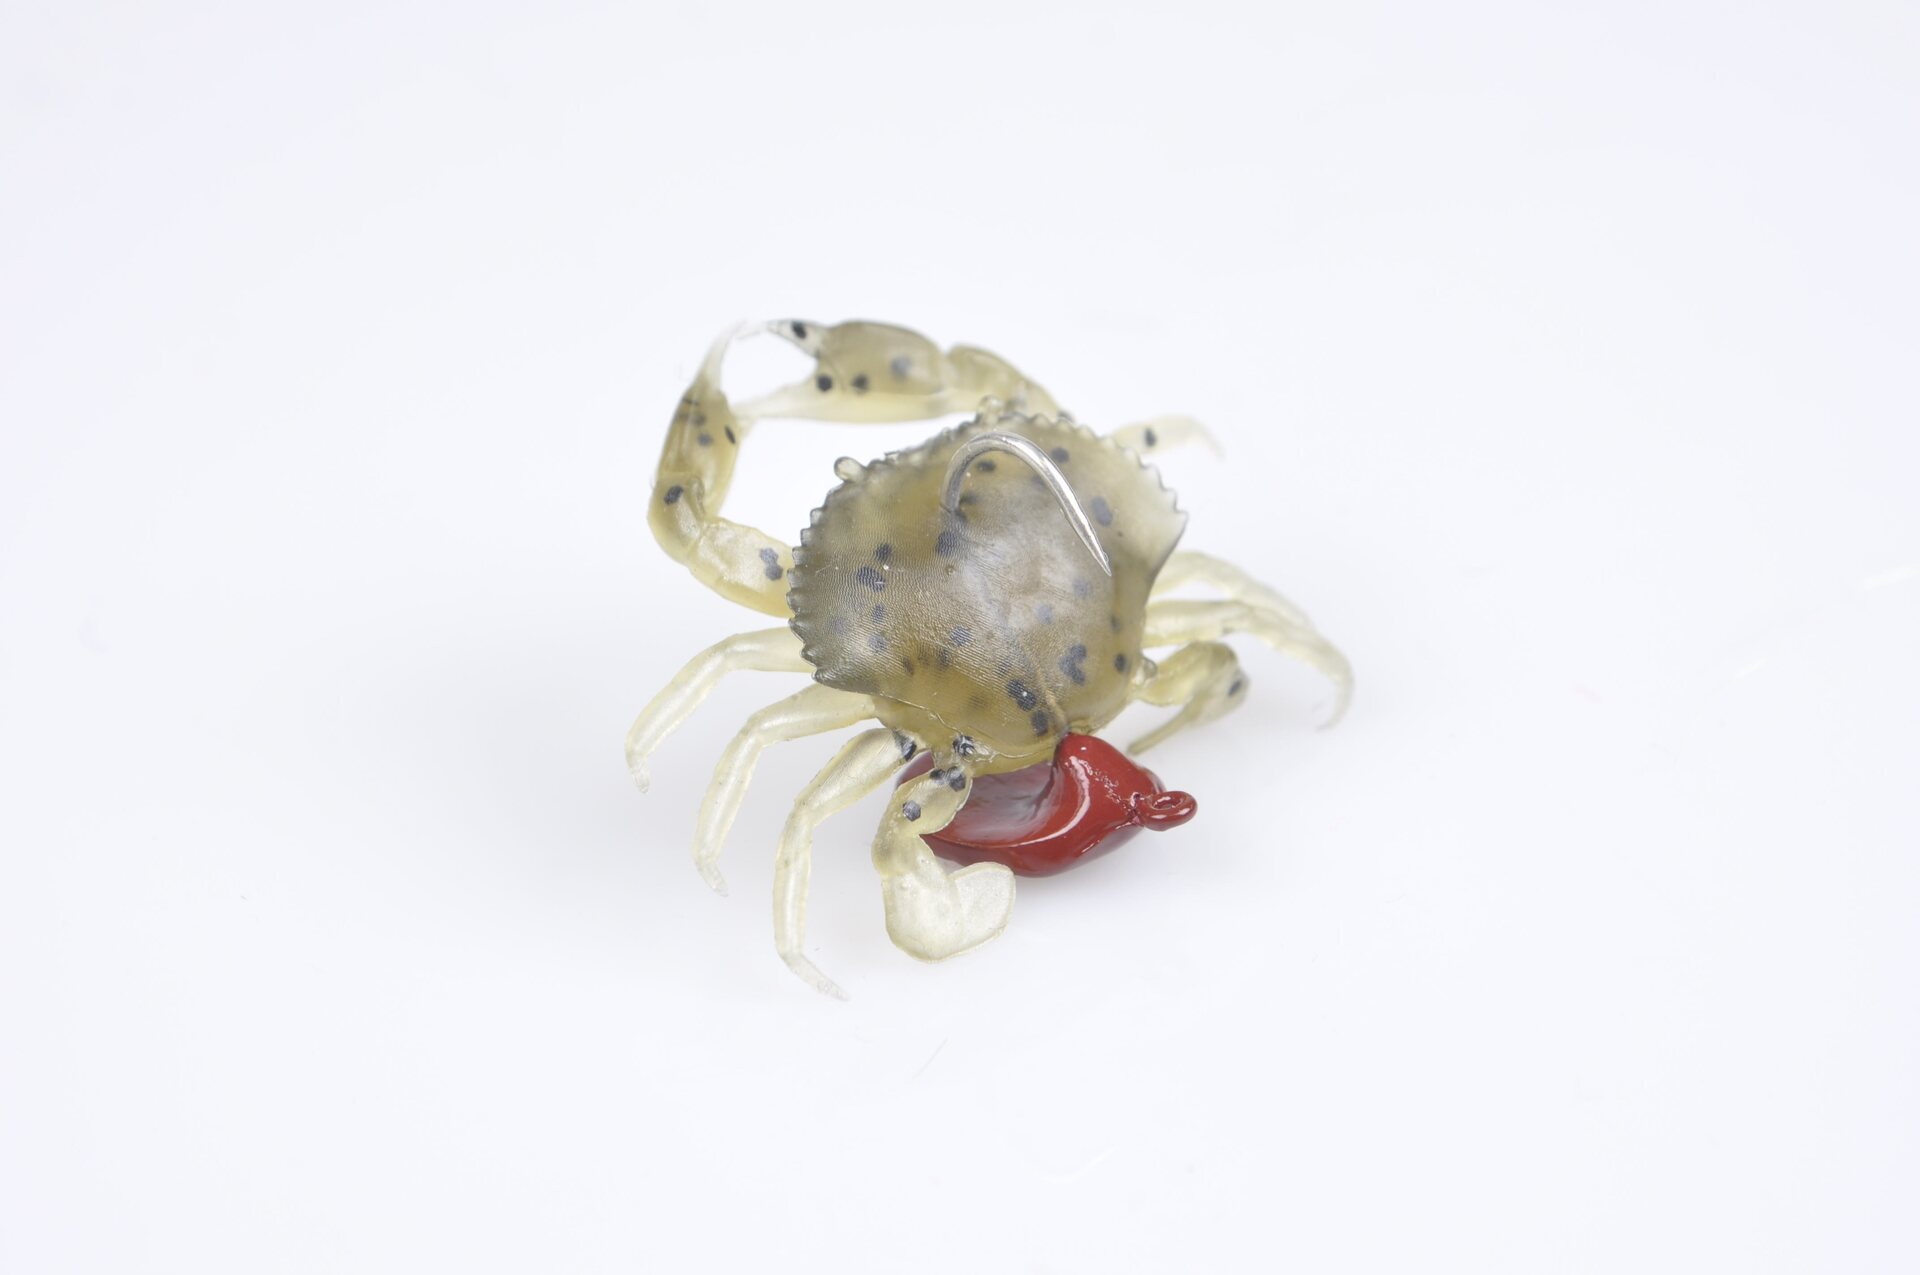 Savage Gear 3D Crab PVC